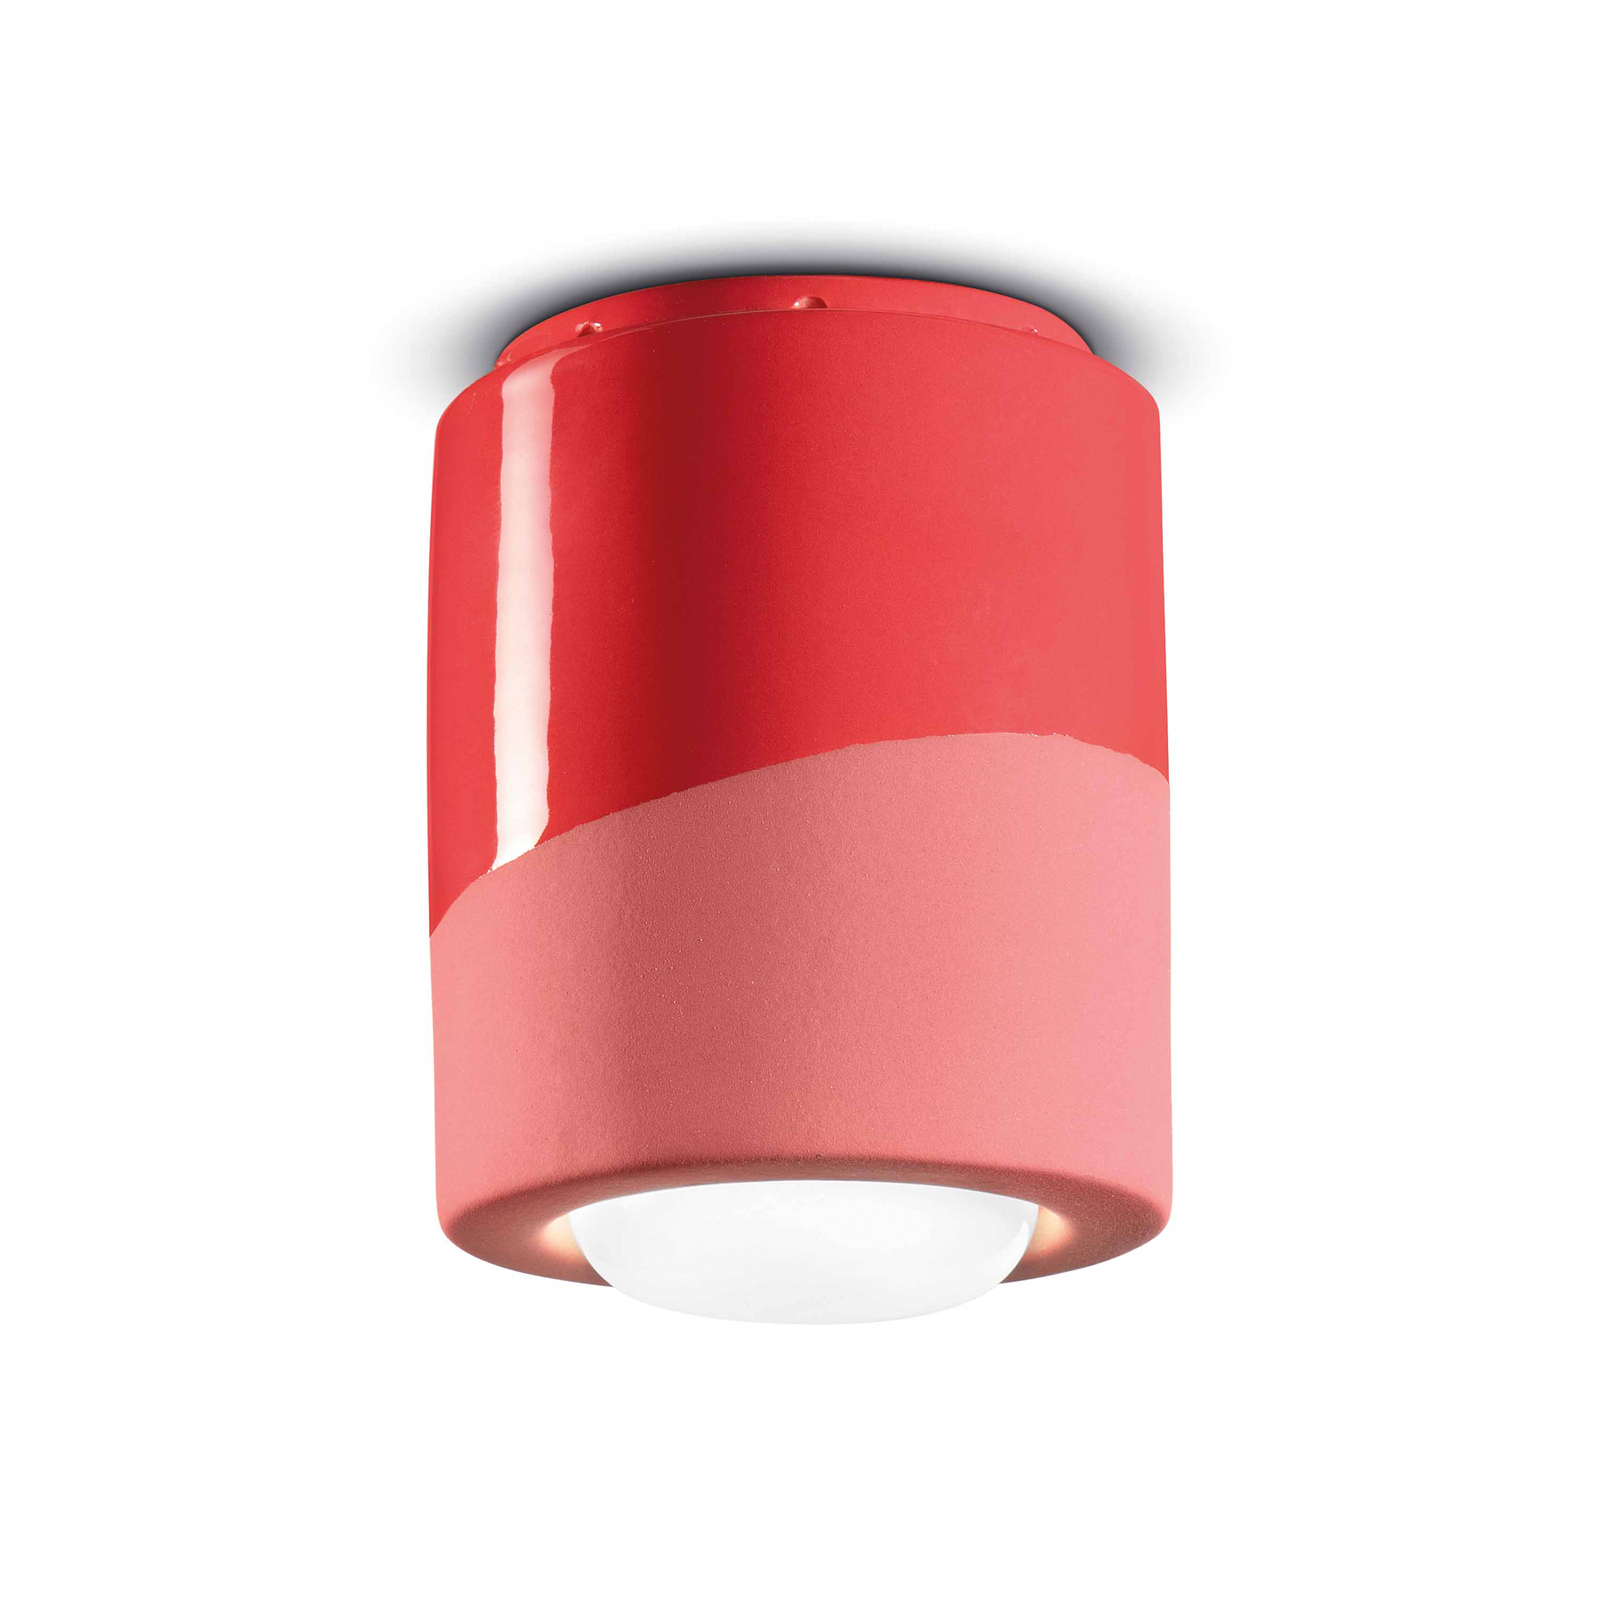 PI loftslampe, cylindrisk, Ø 12,5 cm, rød